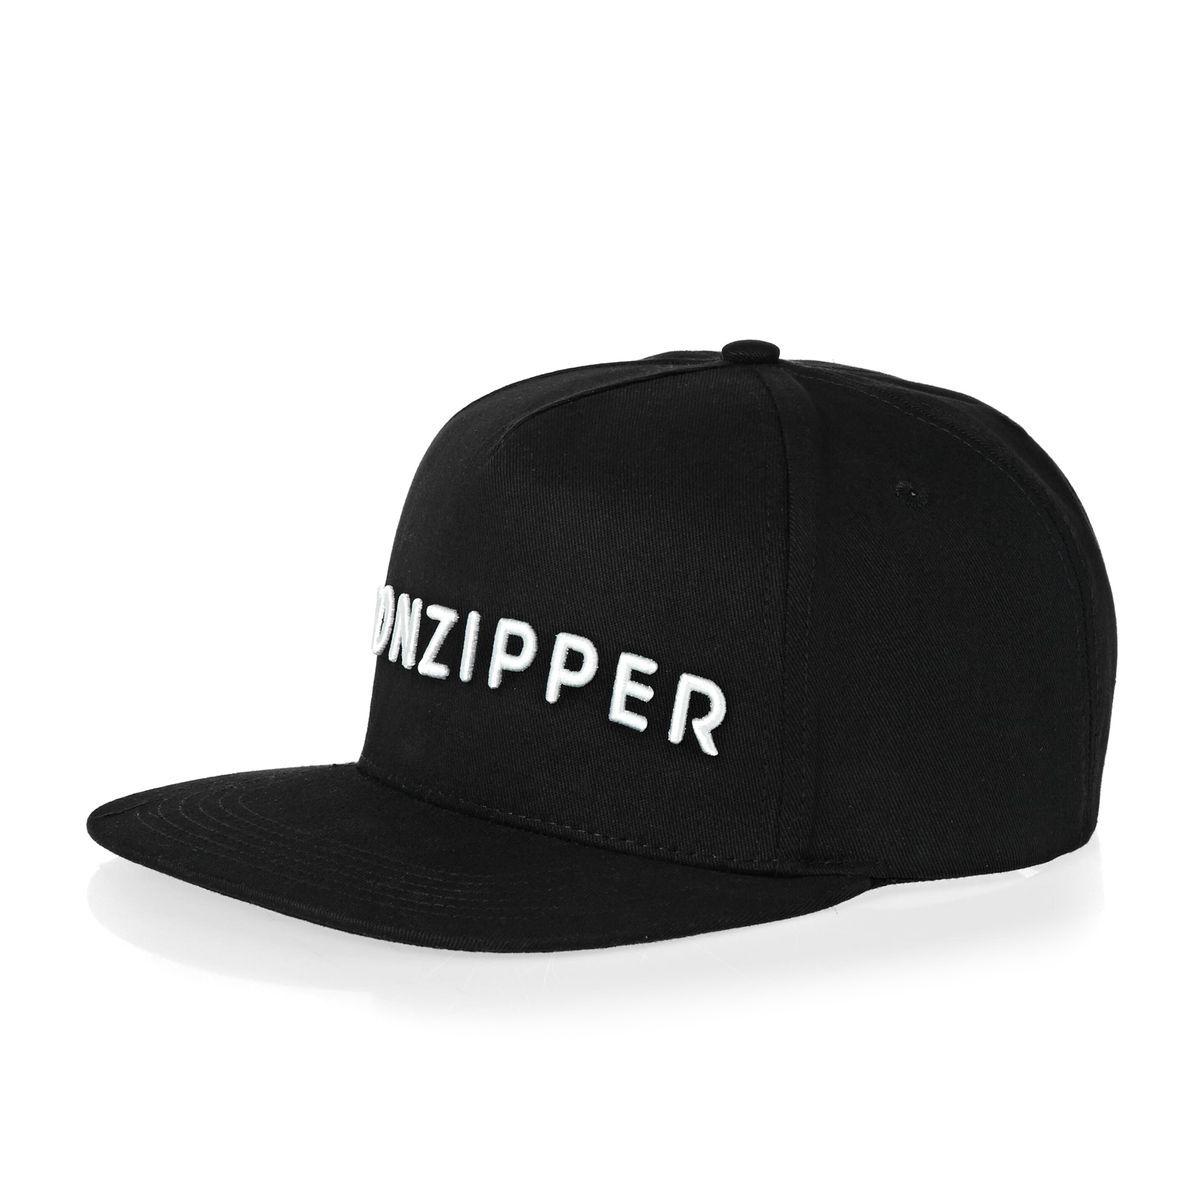 Von Zipper Logo - Von Zipper Cap Zipper Logo Lettering Snap Back Cap